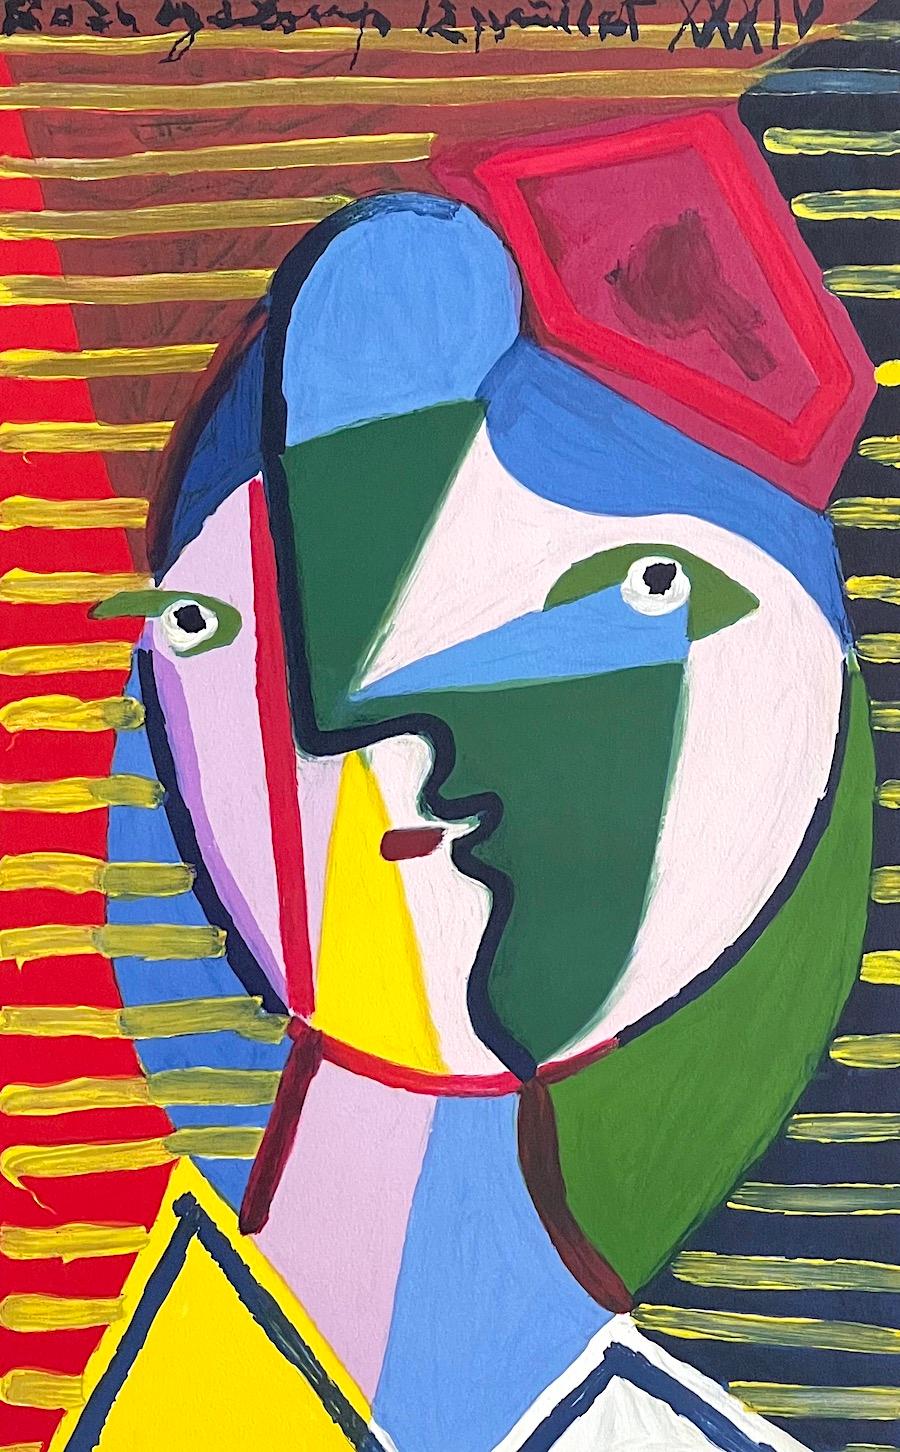 VISAGE DE FEMME SUR FOND RAYE Lithograph, Abstract Portrait, Round Face, Stripes - Print by (after) Pablo Picasso